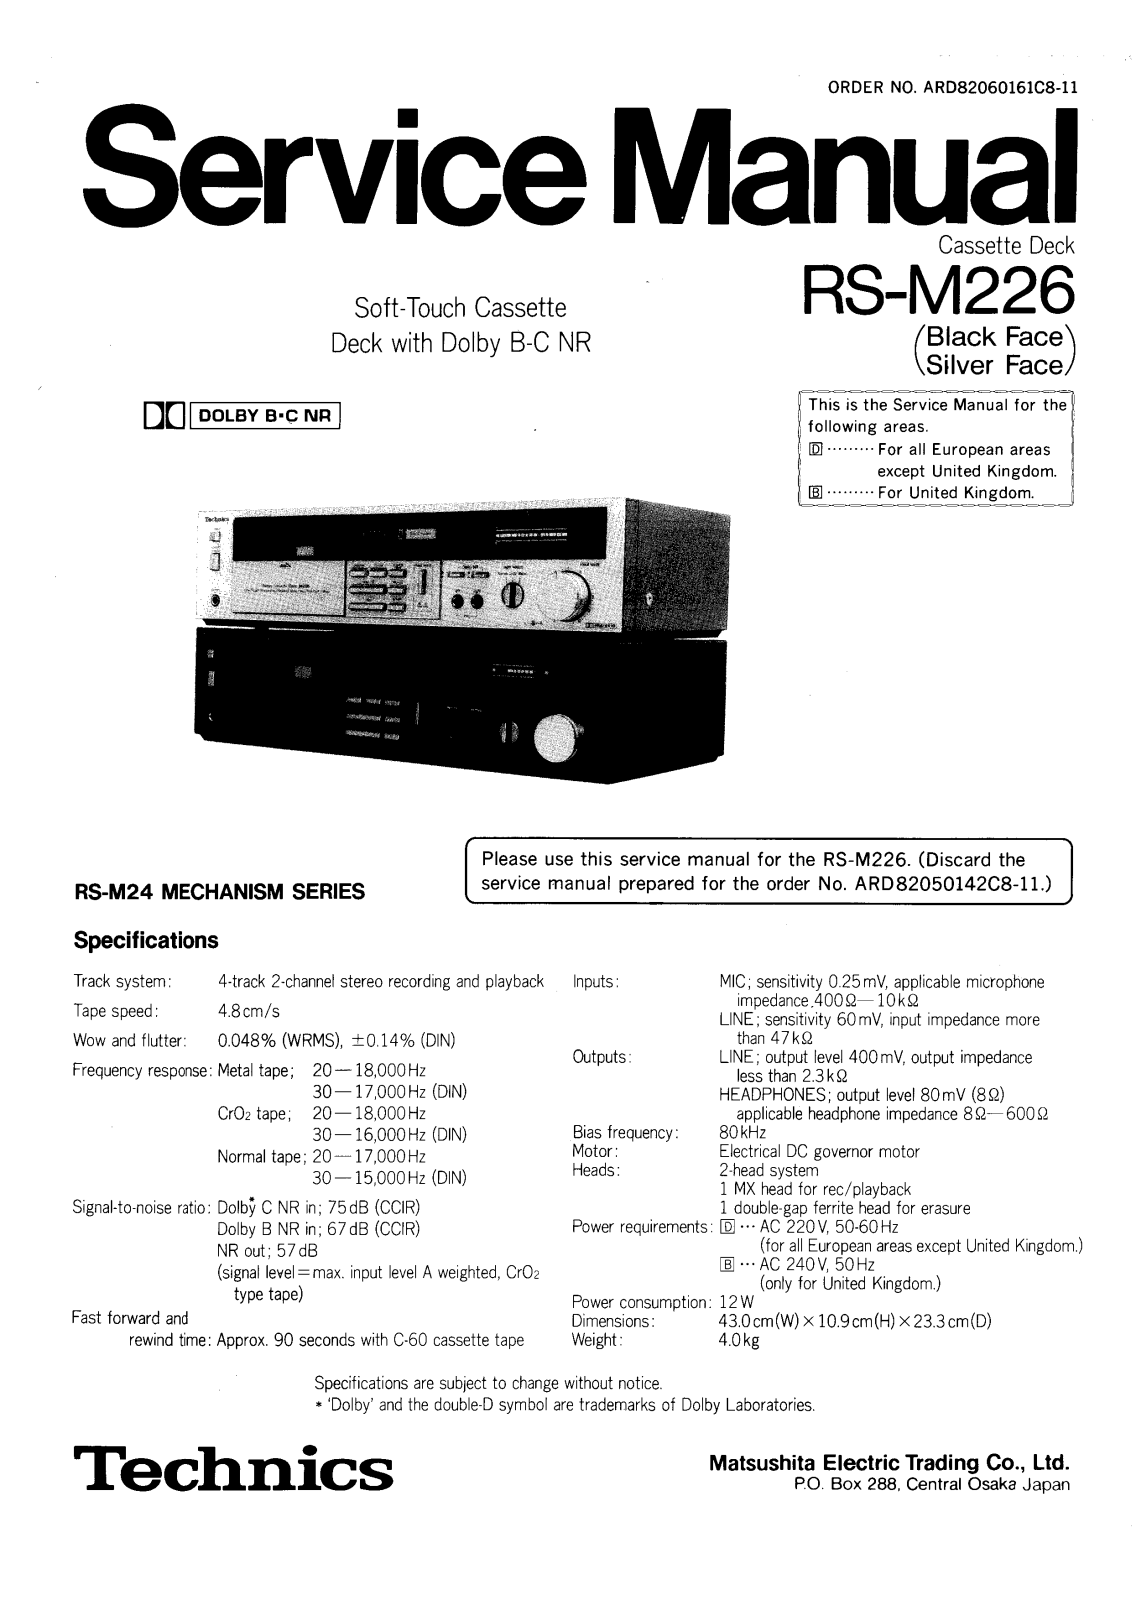 Technics RSM-226 Service manual